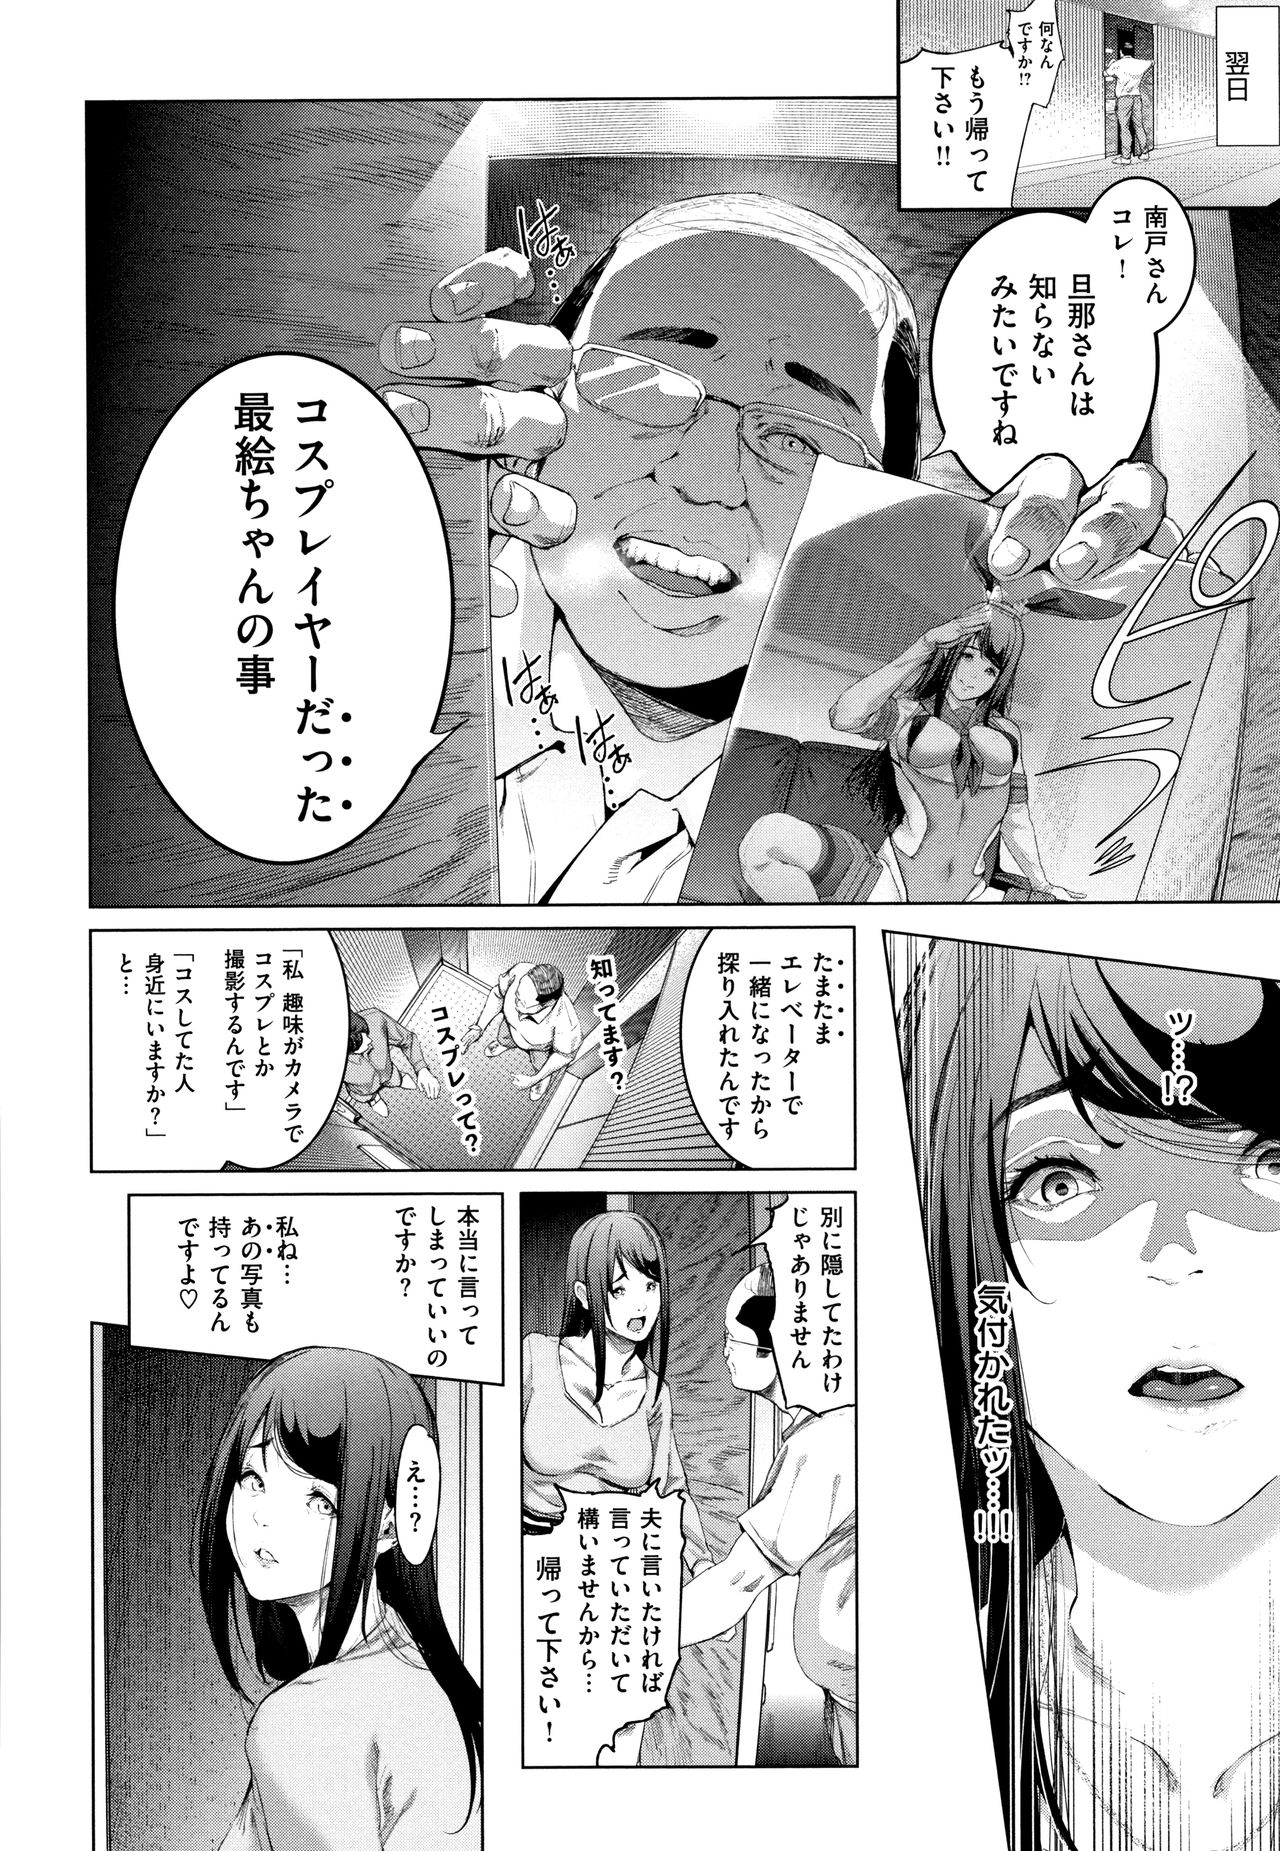 [Suzuhane Suzu] Cos wa Midara na Kamen Shogyouban - Cosplay is a mask [wakes up erotic personality...] 40